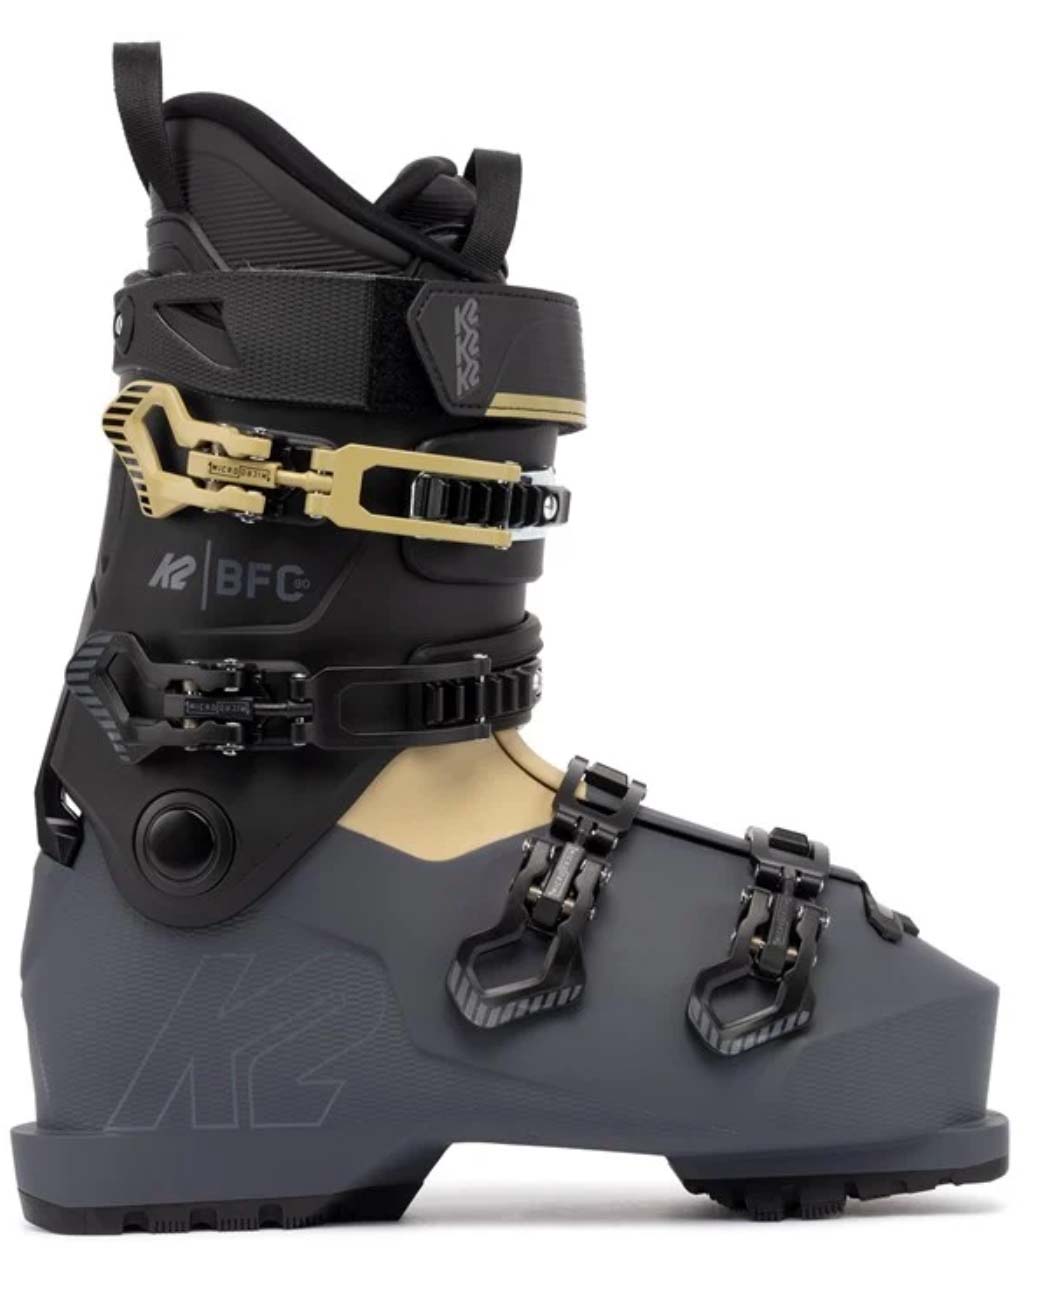 K2 BFC 90 ski boots